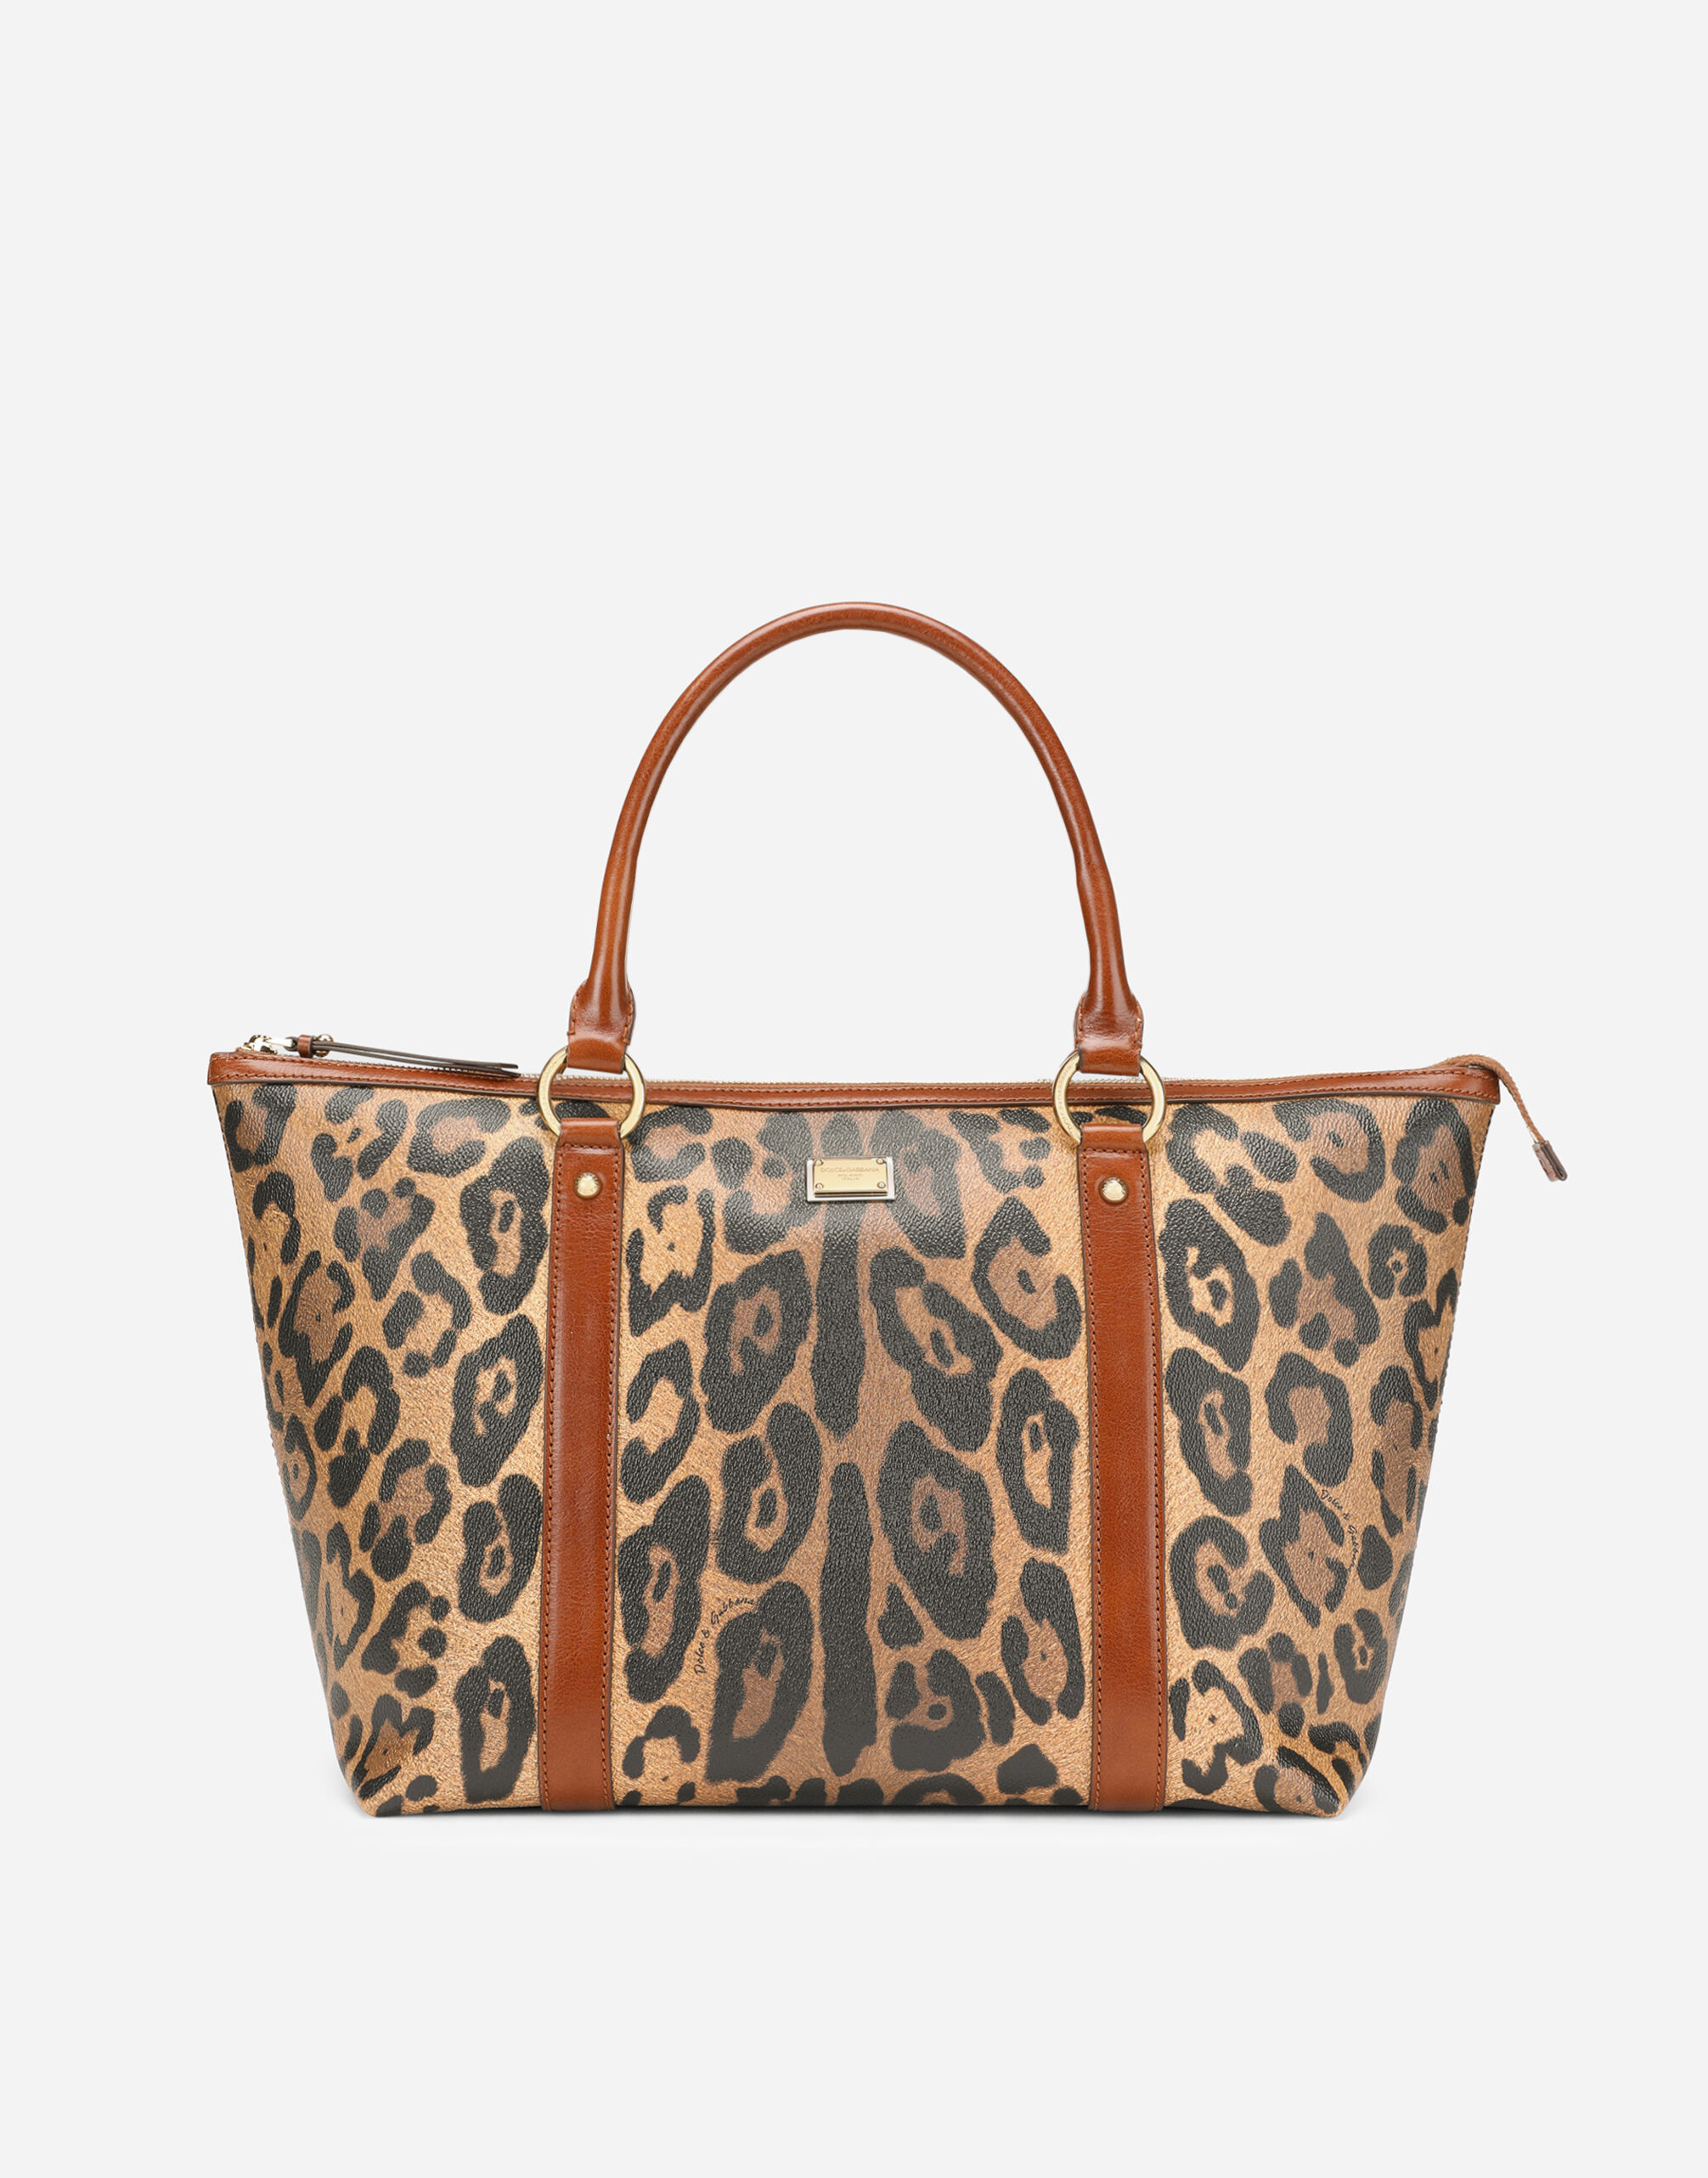 DOLCE & GABBANA #39501 Black-Brown Leopard Print Leather-Fabric